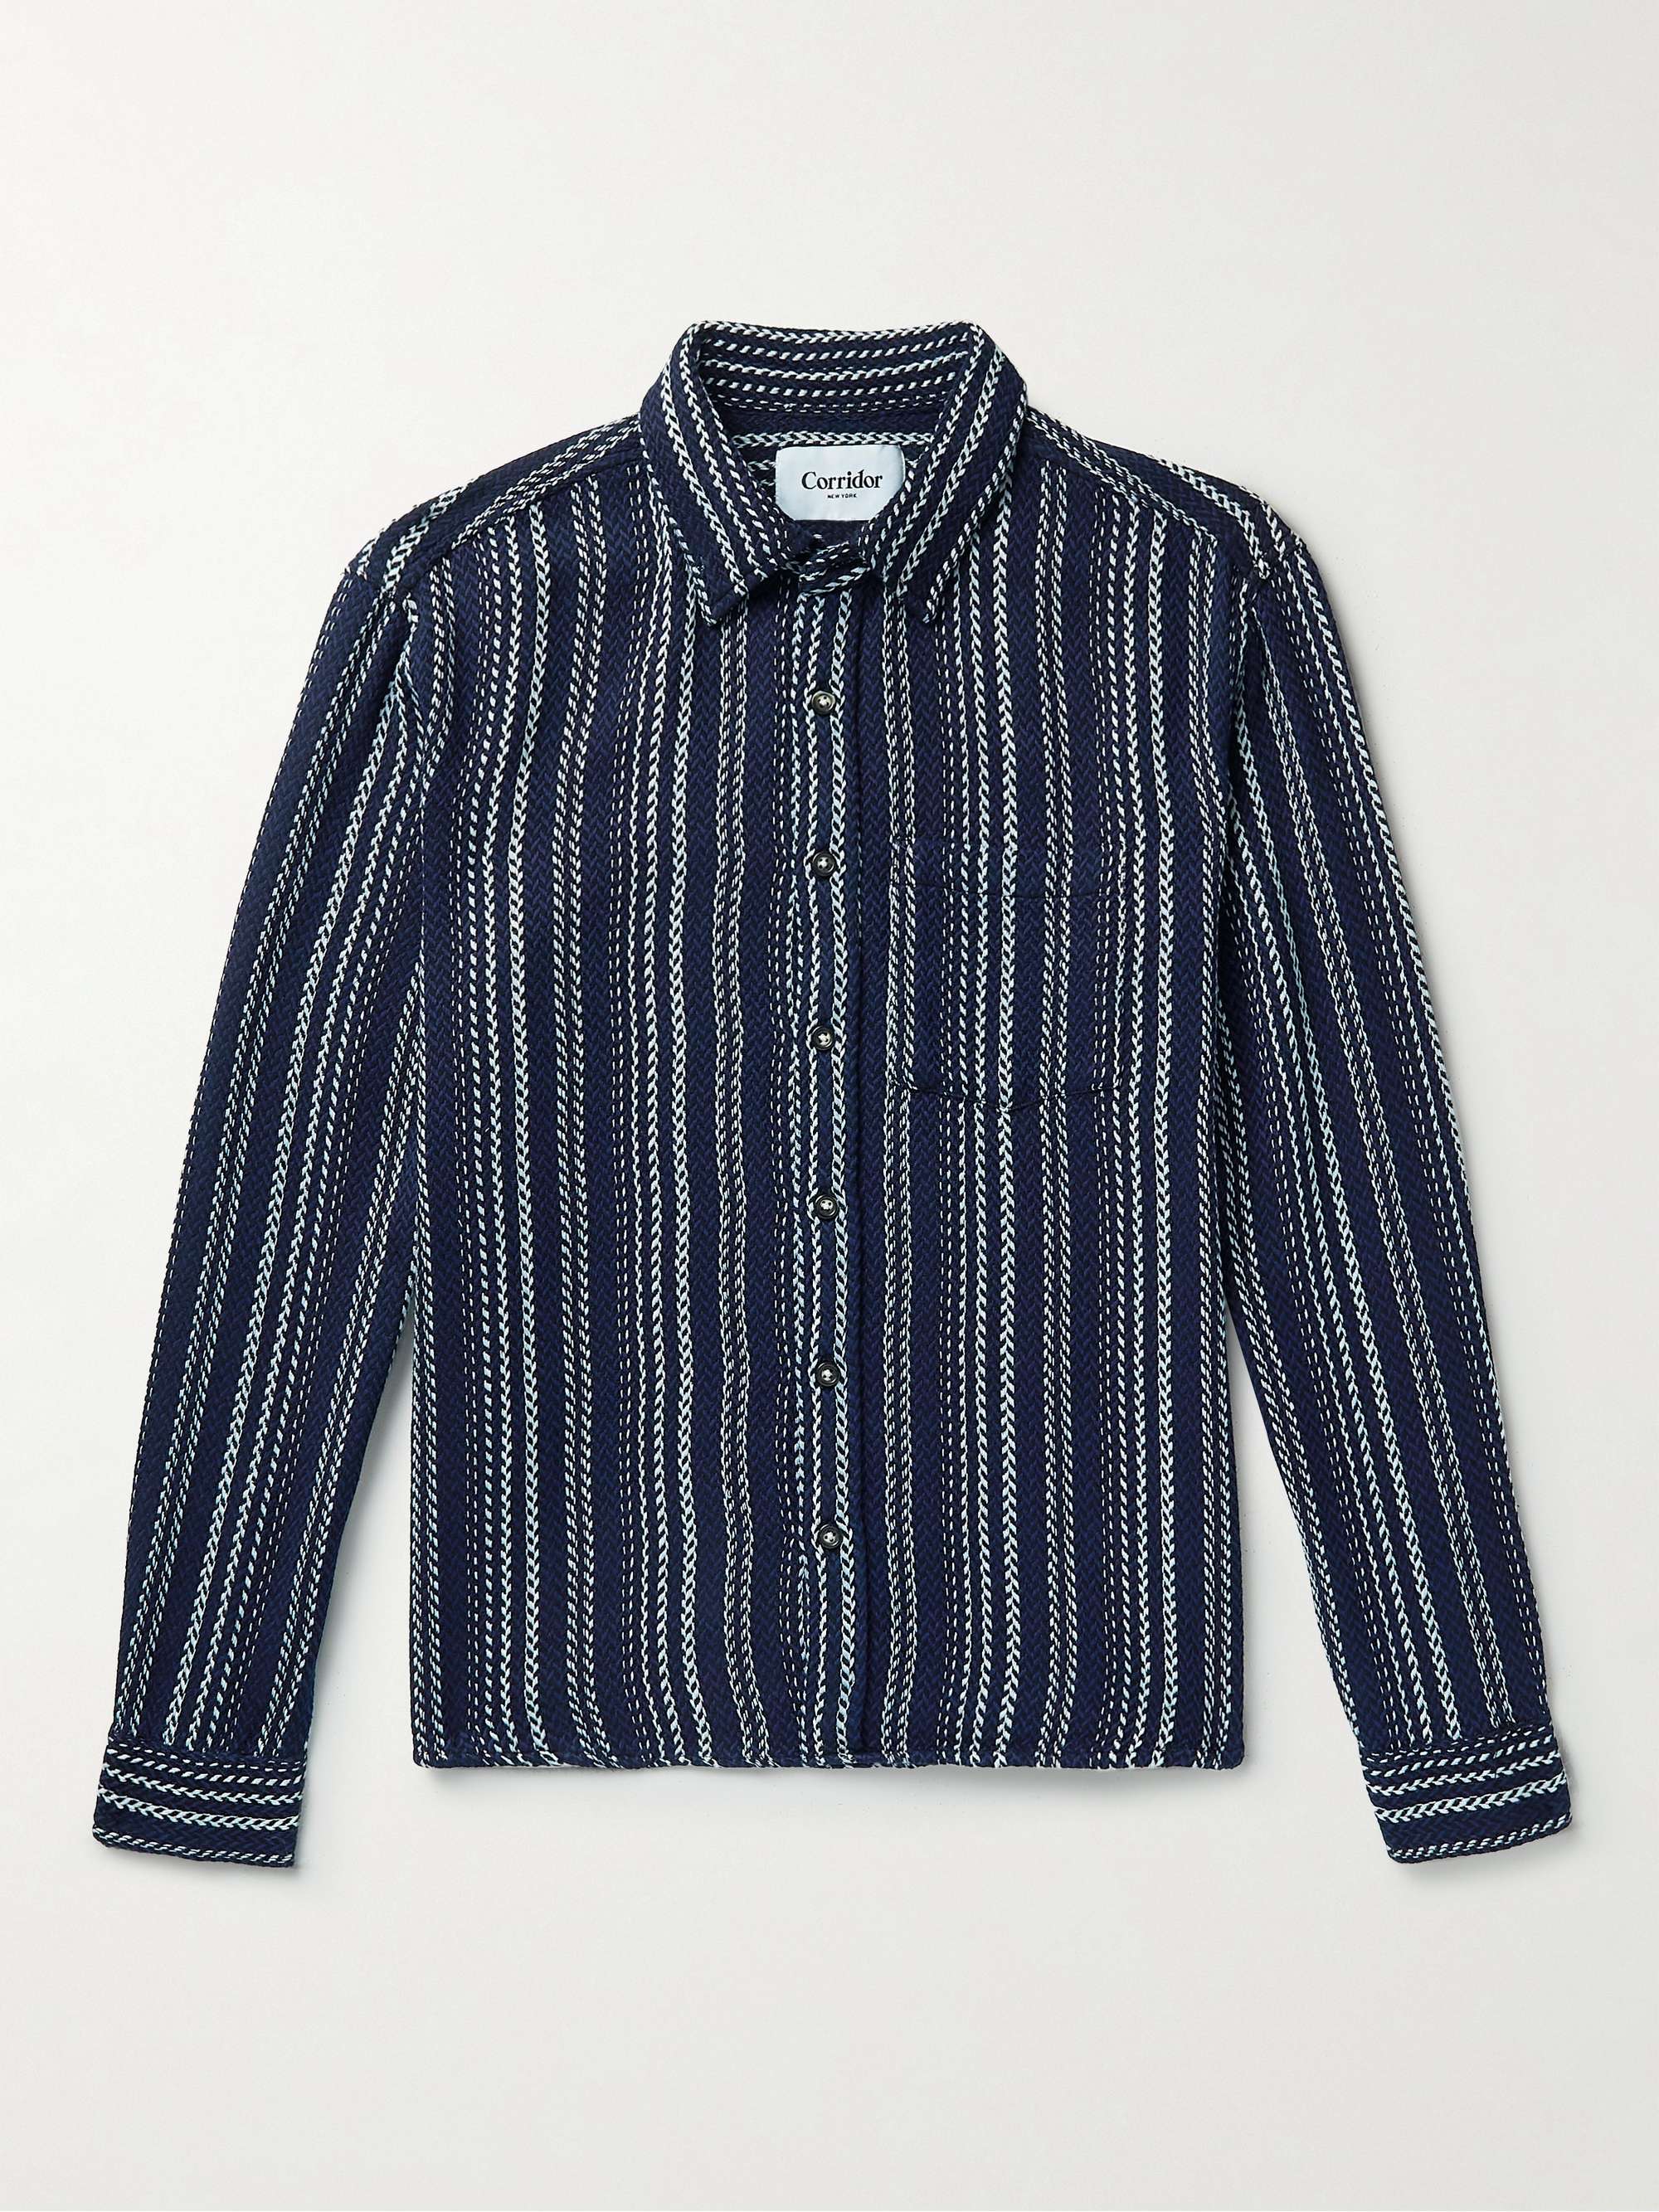 CORRIDOR Sky Captain Striped Cotton-Jacquard Shirt